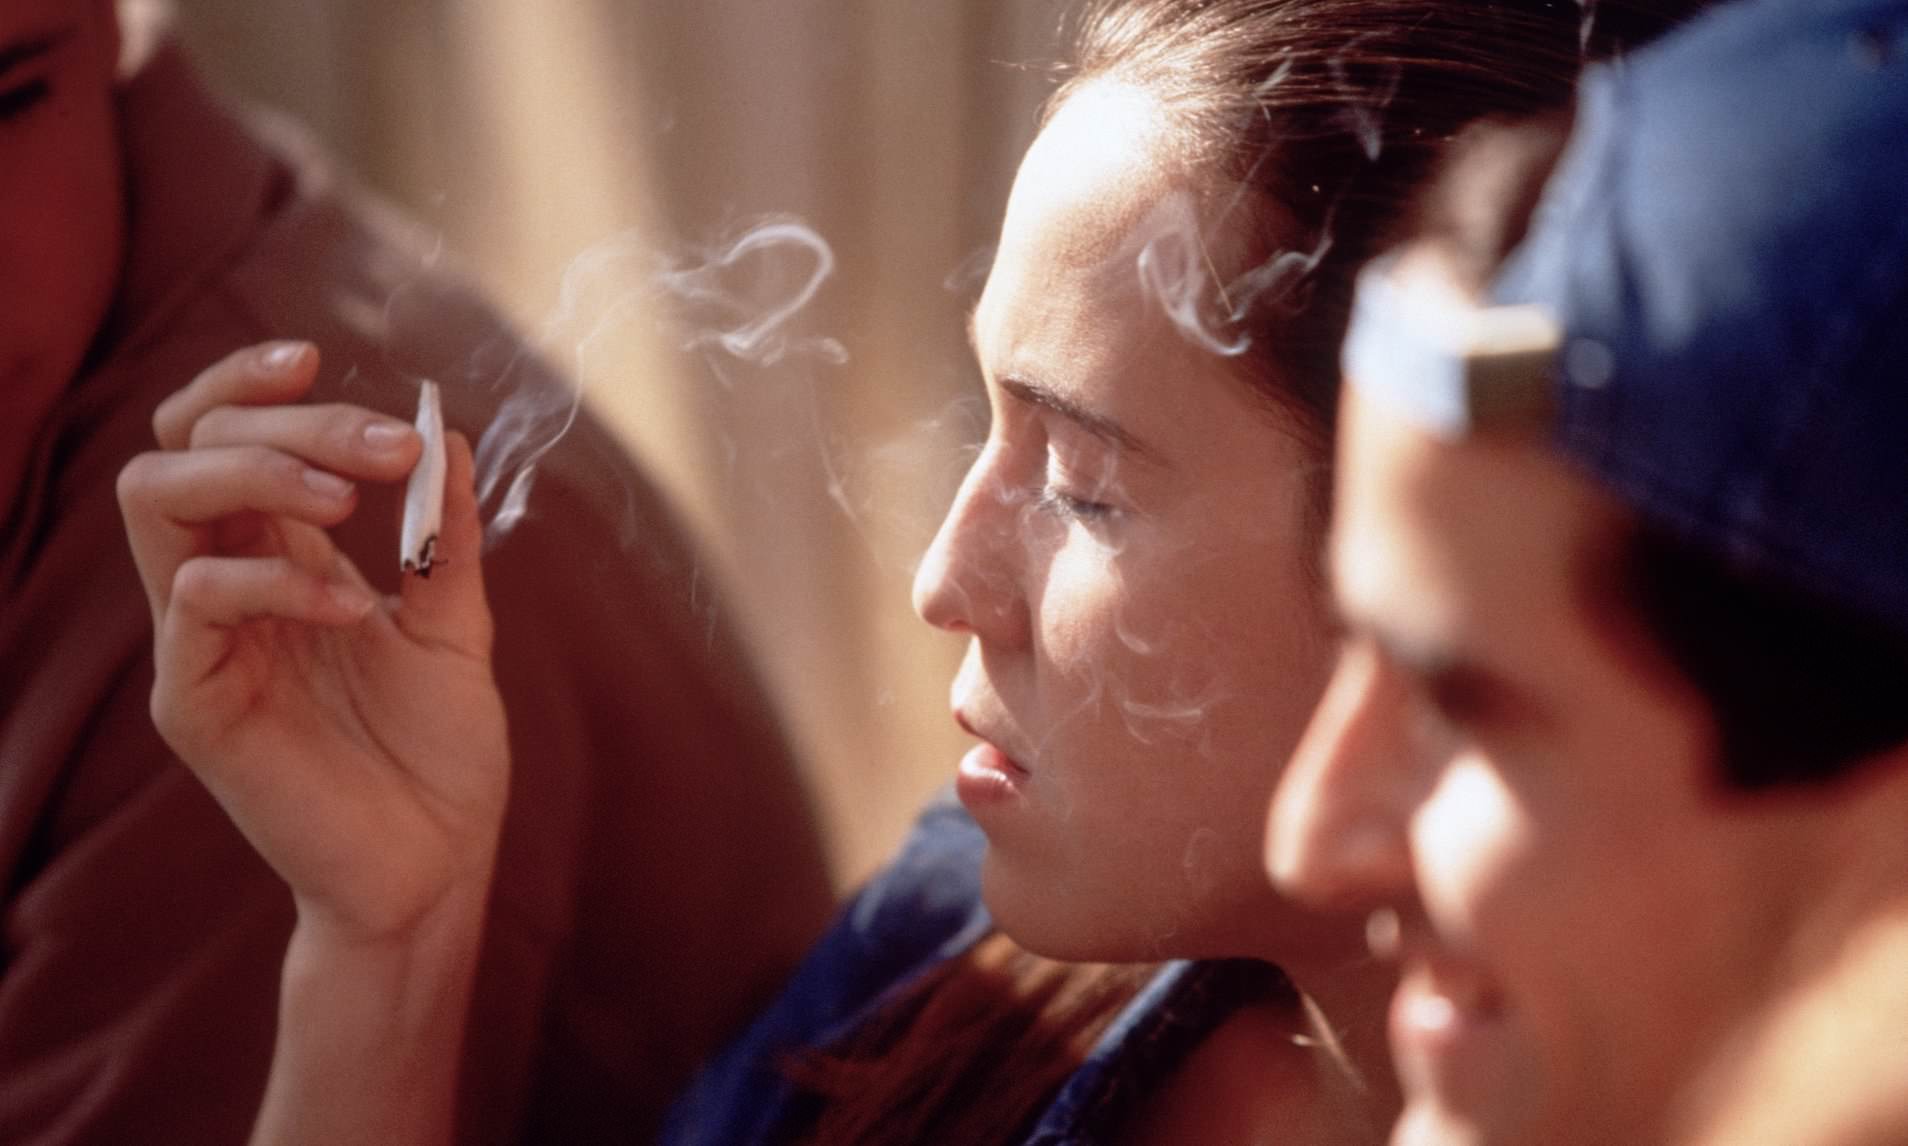 Cannabis Use Among Male Teens Impacts Brain Development